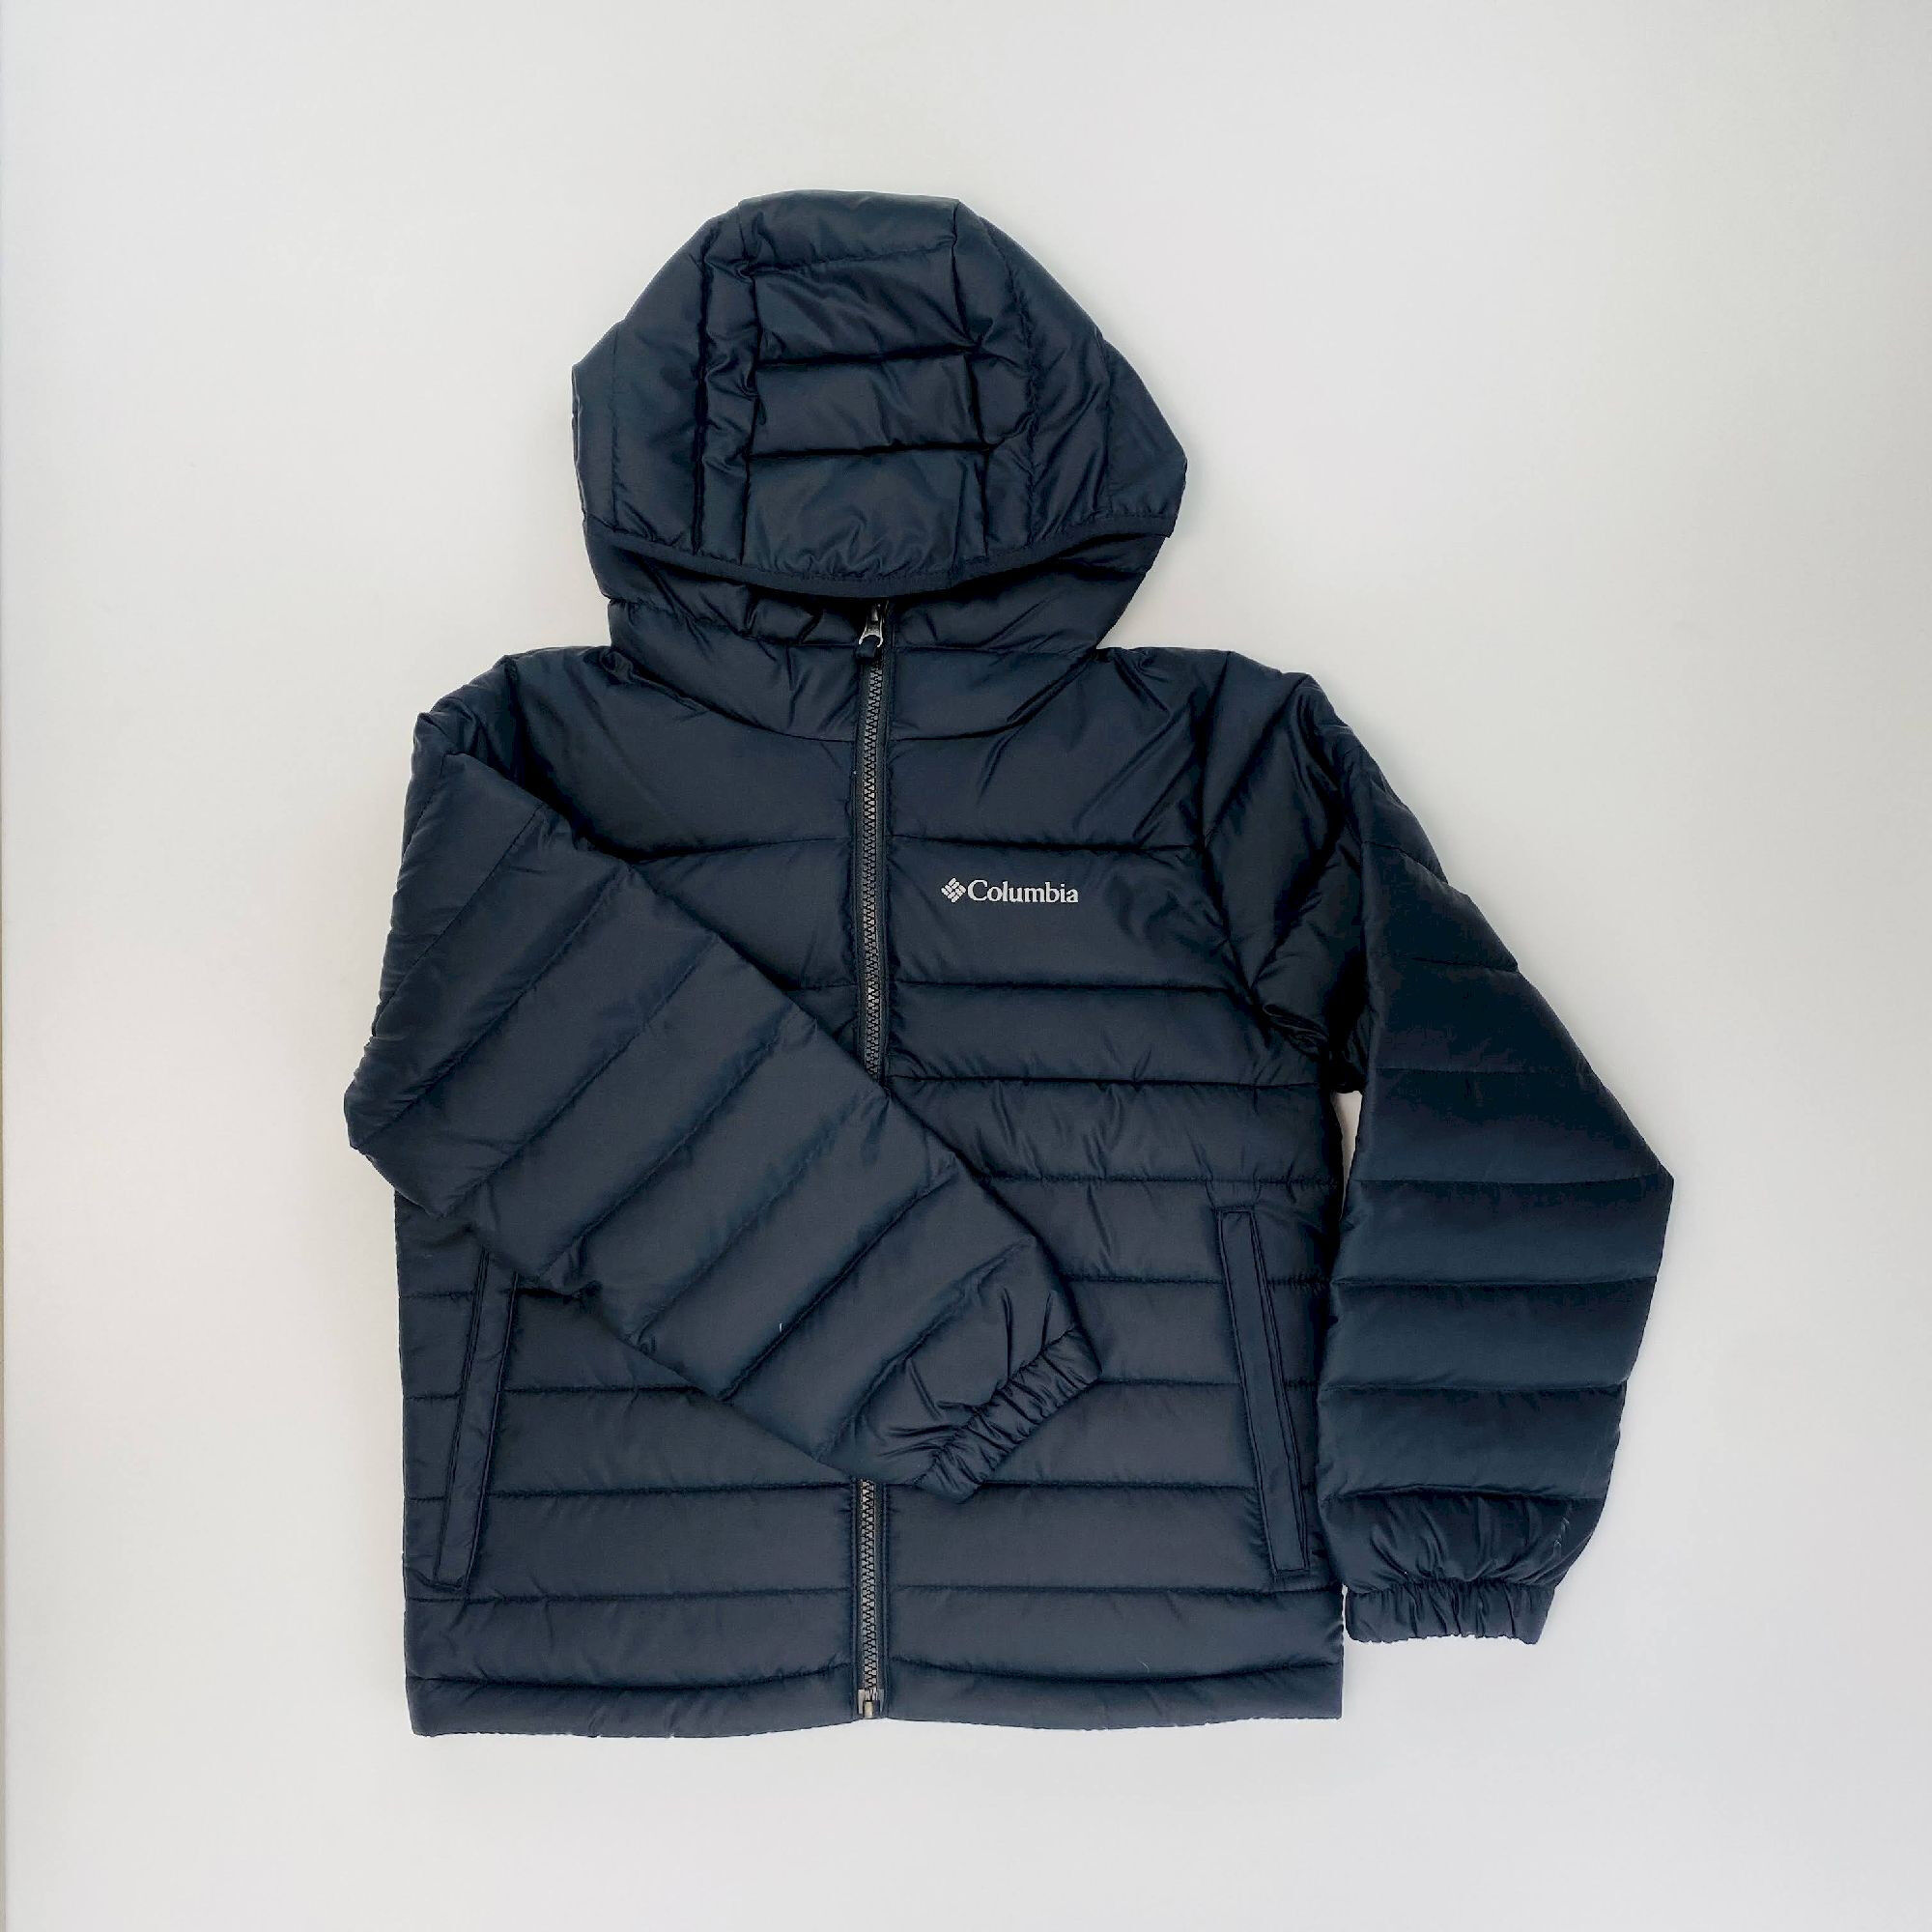 Columbia Tumble Rock™ Down Hooded Jacket - Giacca sintetica di seconda mano - Bambino - Nero - S | Hardloop